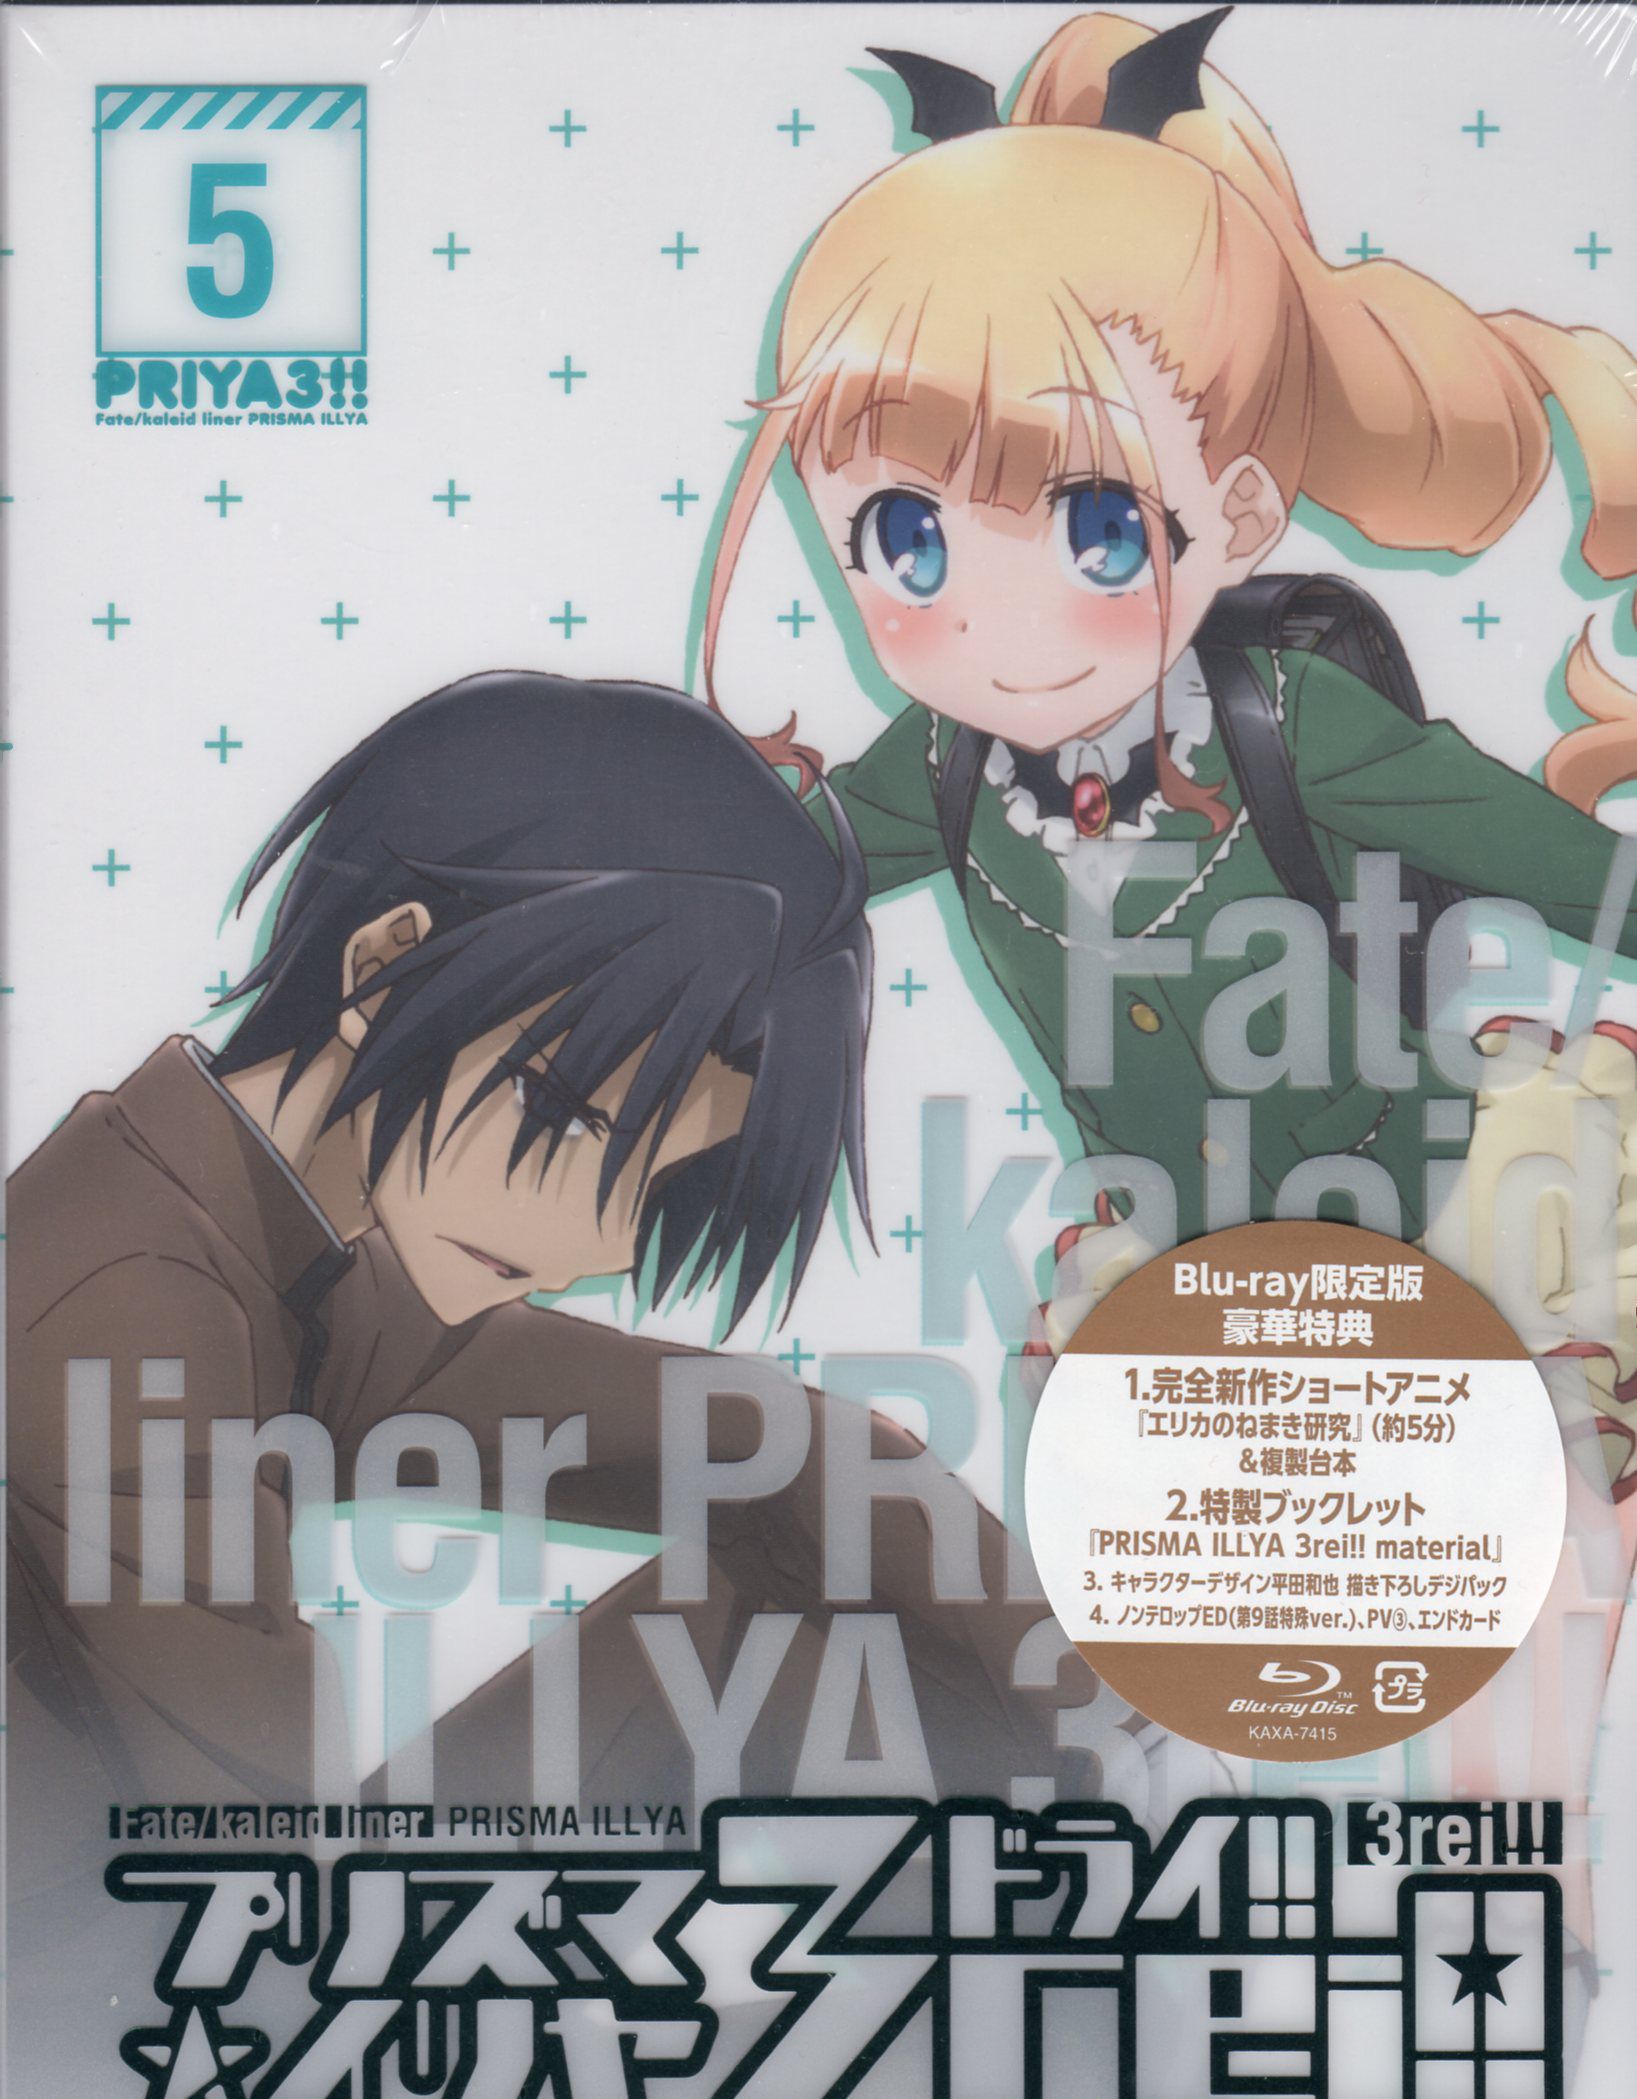 Fate/kaleid liner Prisma ☆ Ilya dry! BD vol. 5 "award animation Nightgown of Erica! reveal a kinky night dolls of sleeping! 」 2